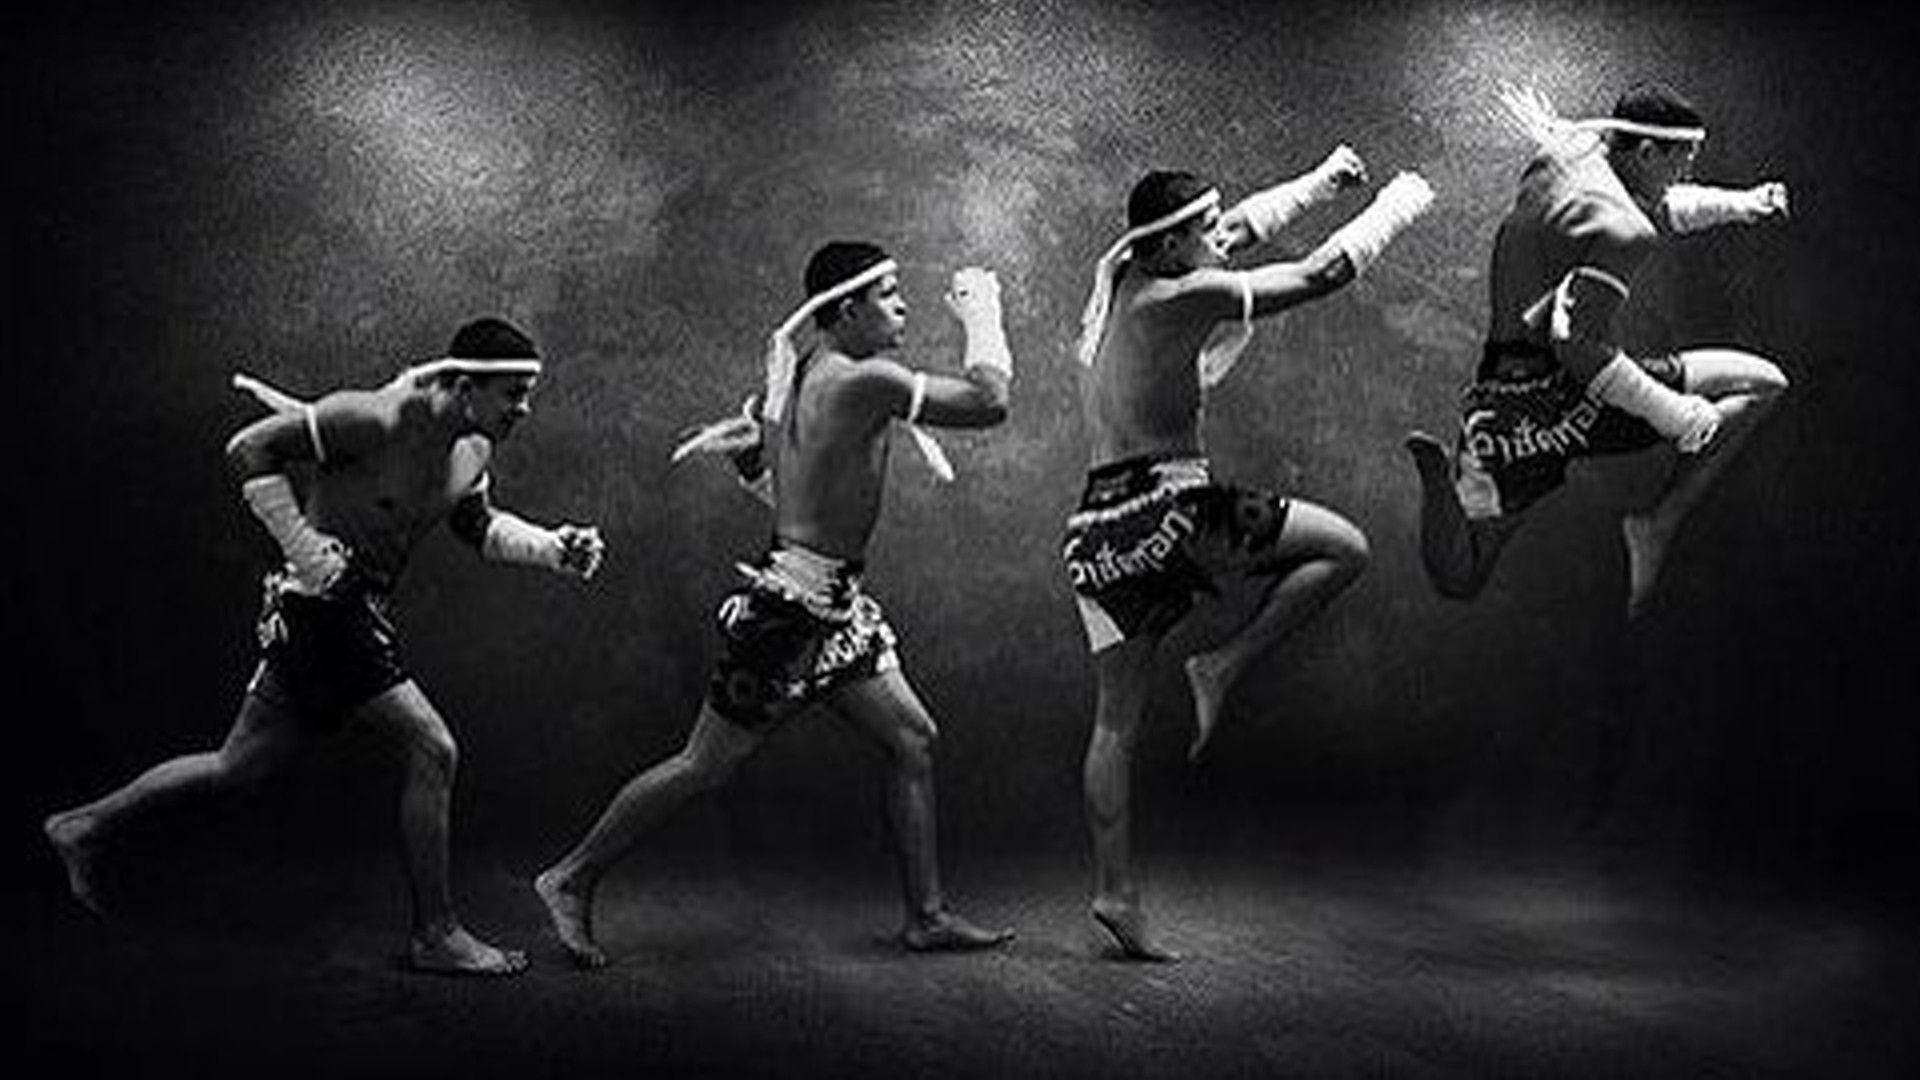 muay thai boxing wallpaper